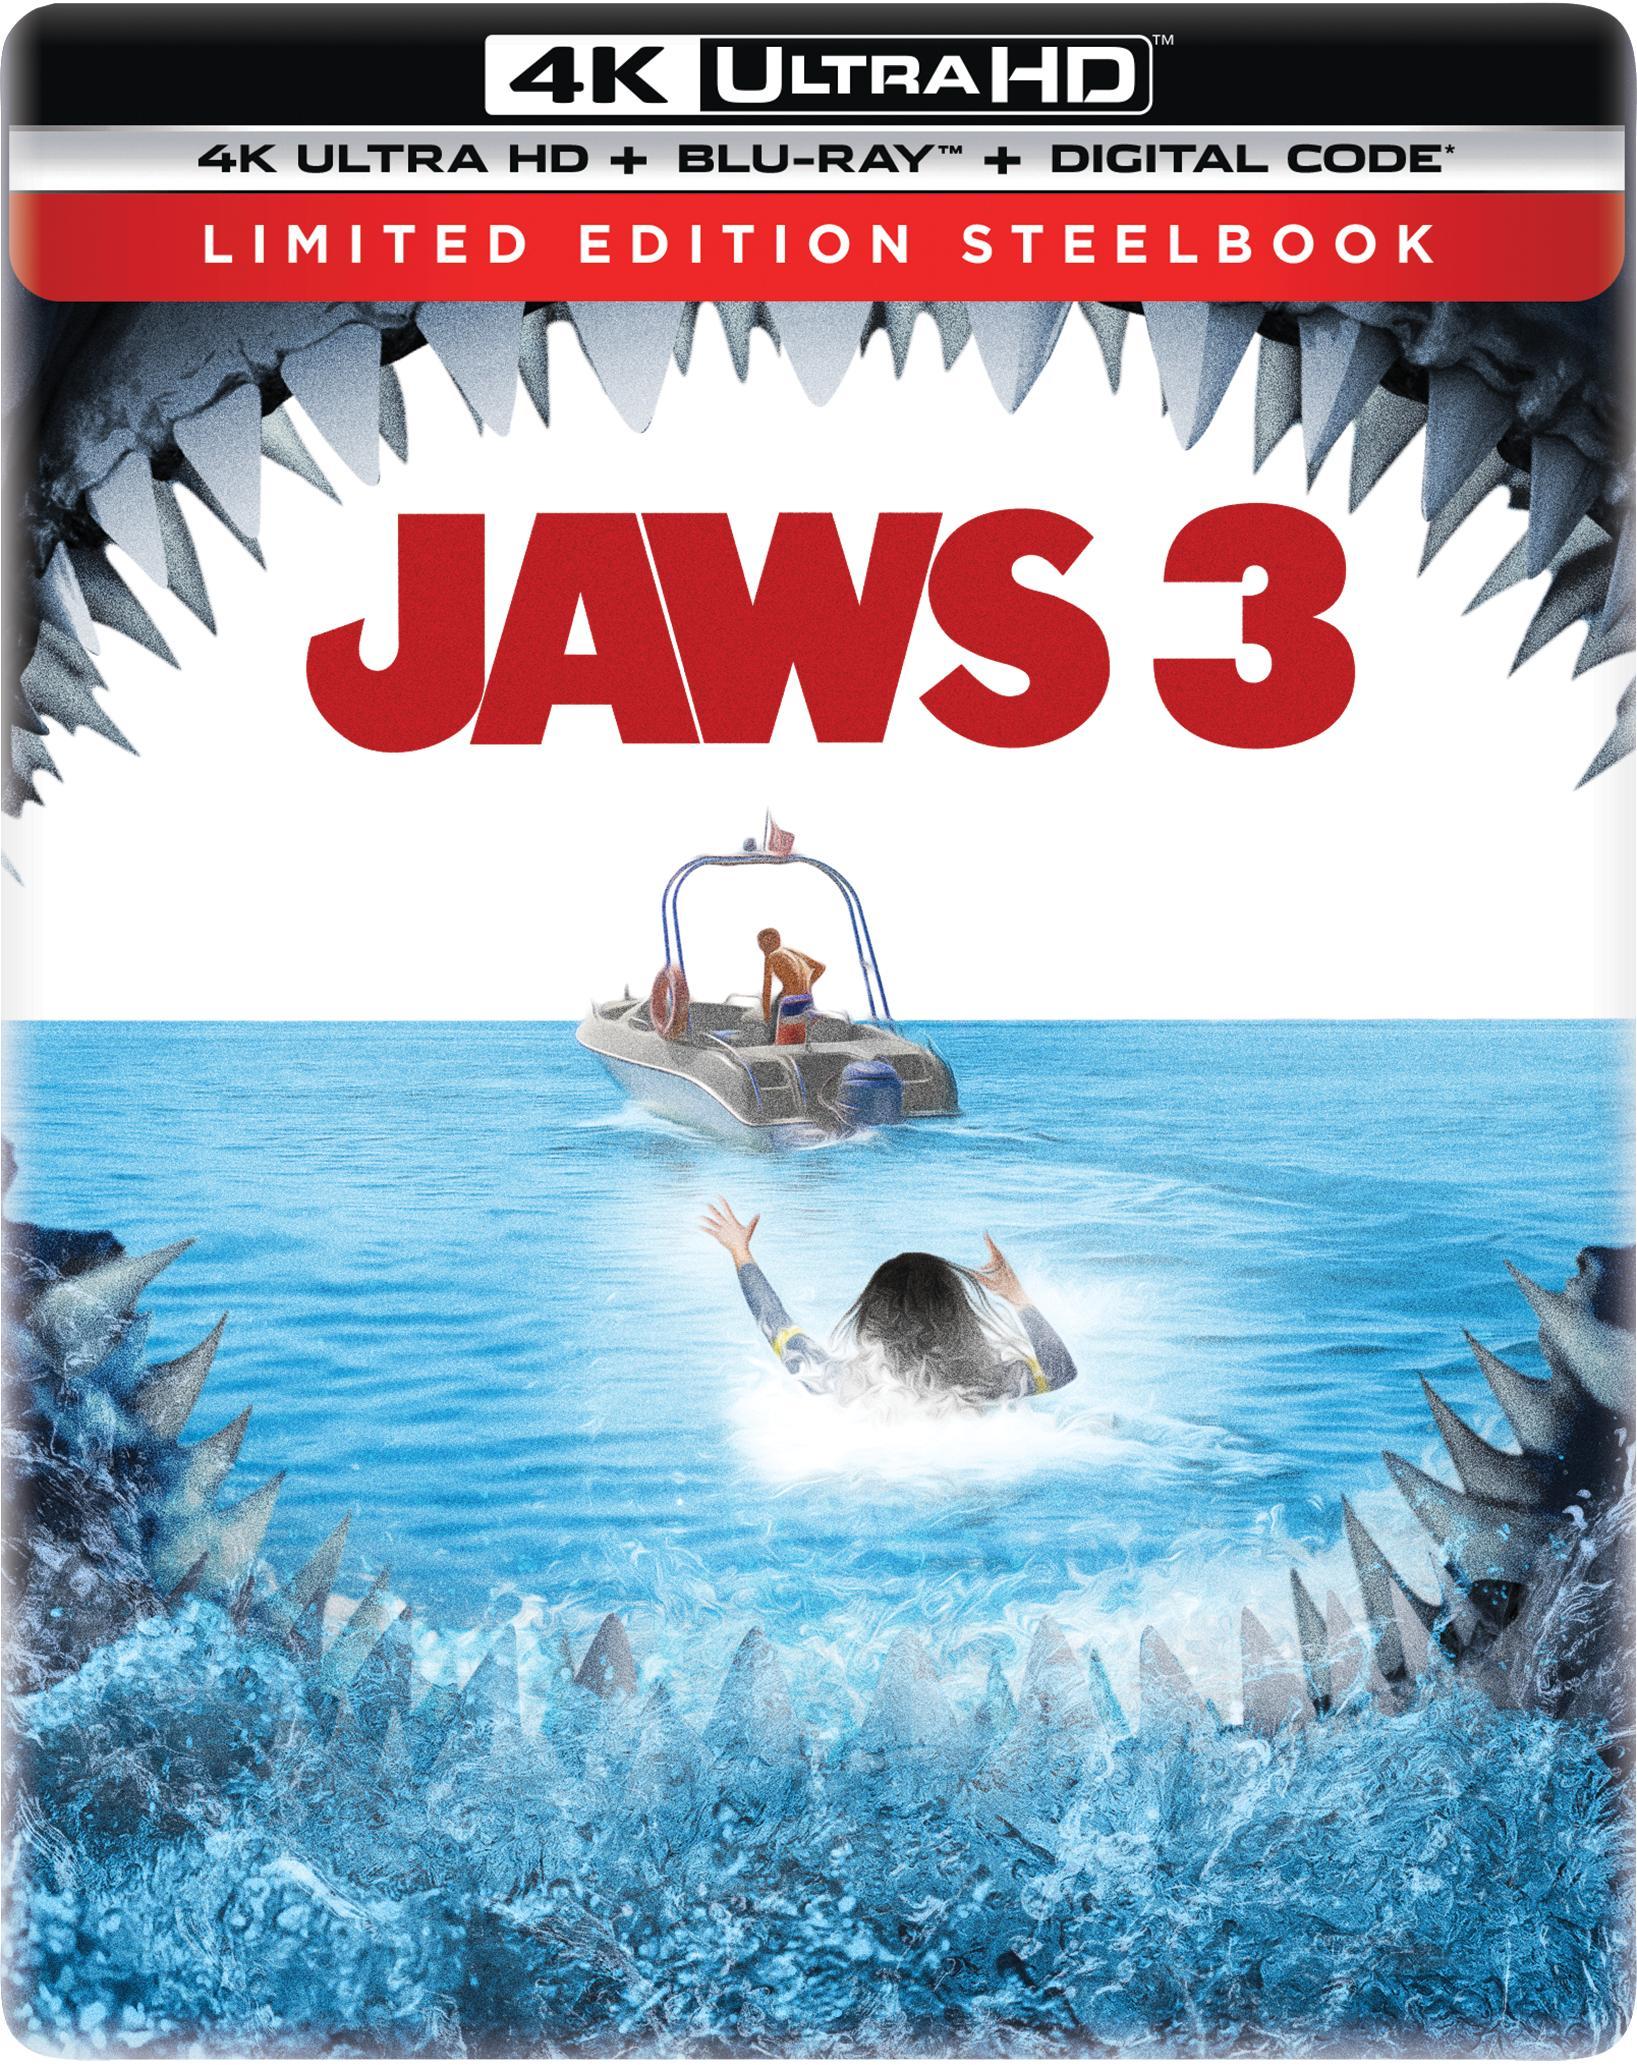 Jaws 3 Limited Edition 4K Steelbook (4K UHD + Blu-ray + Digital Code) [UHD]